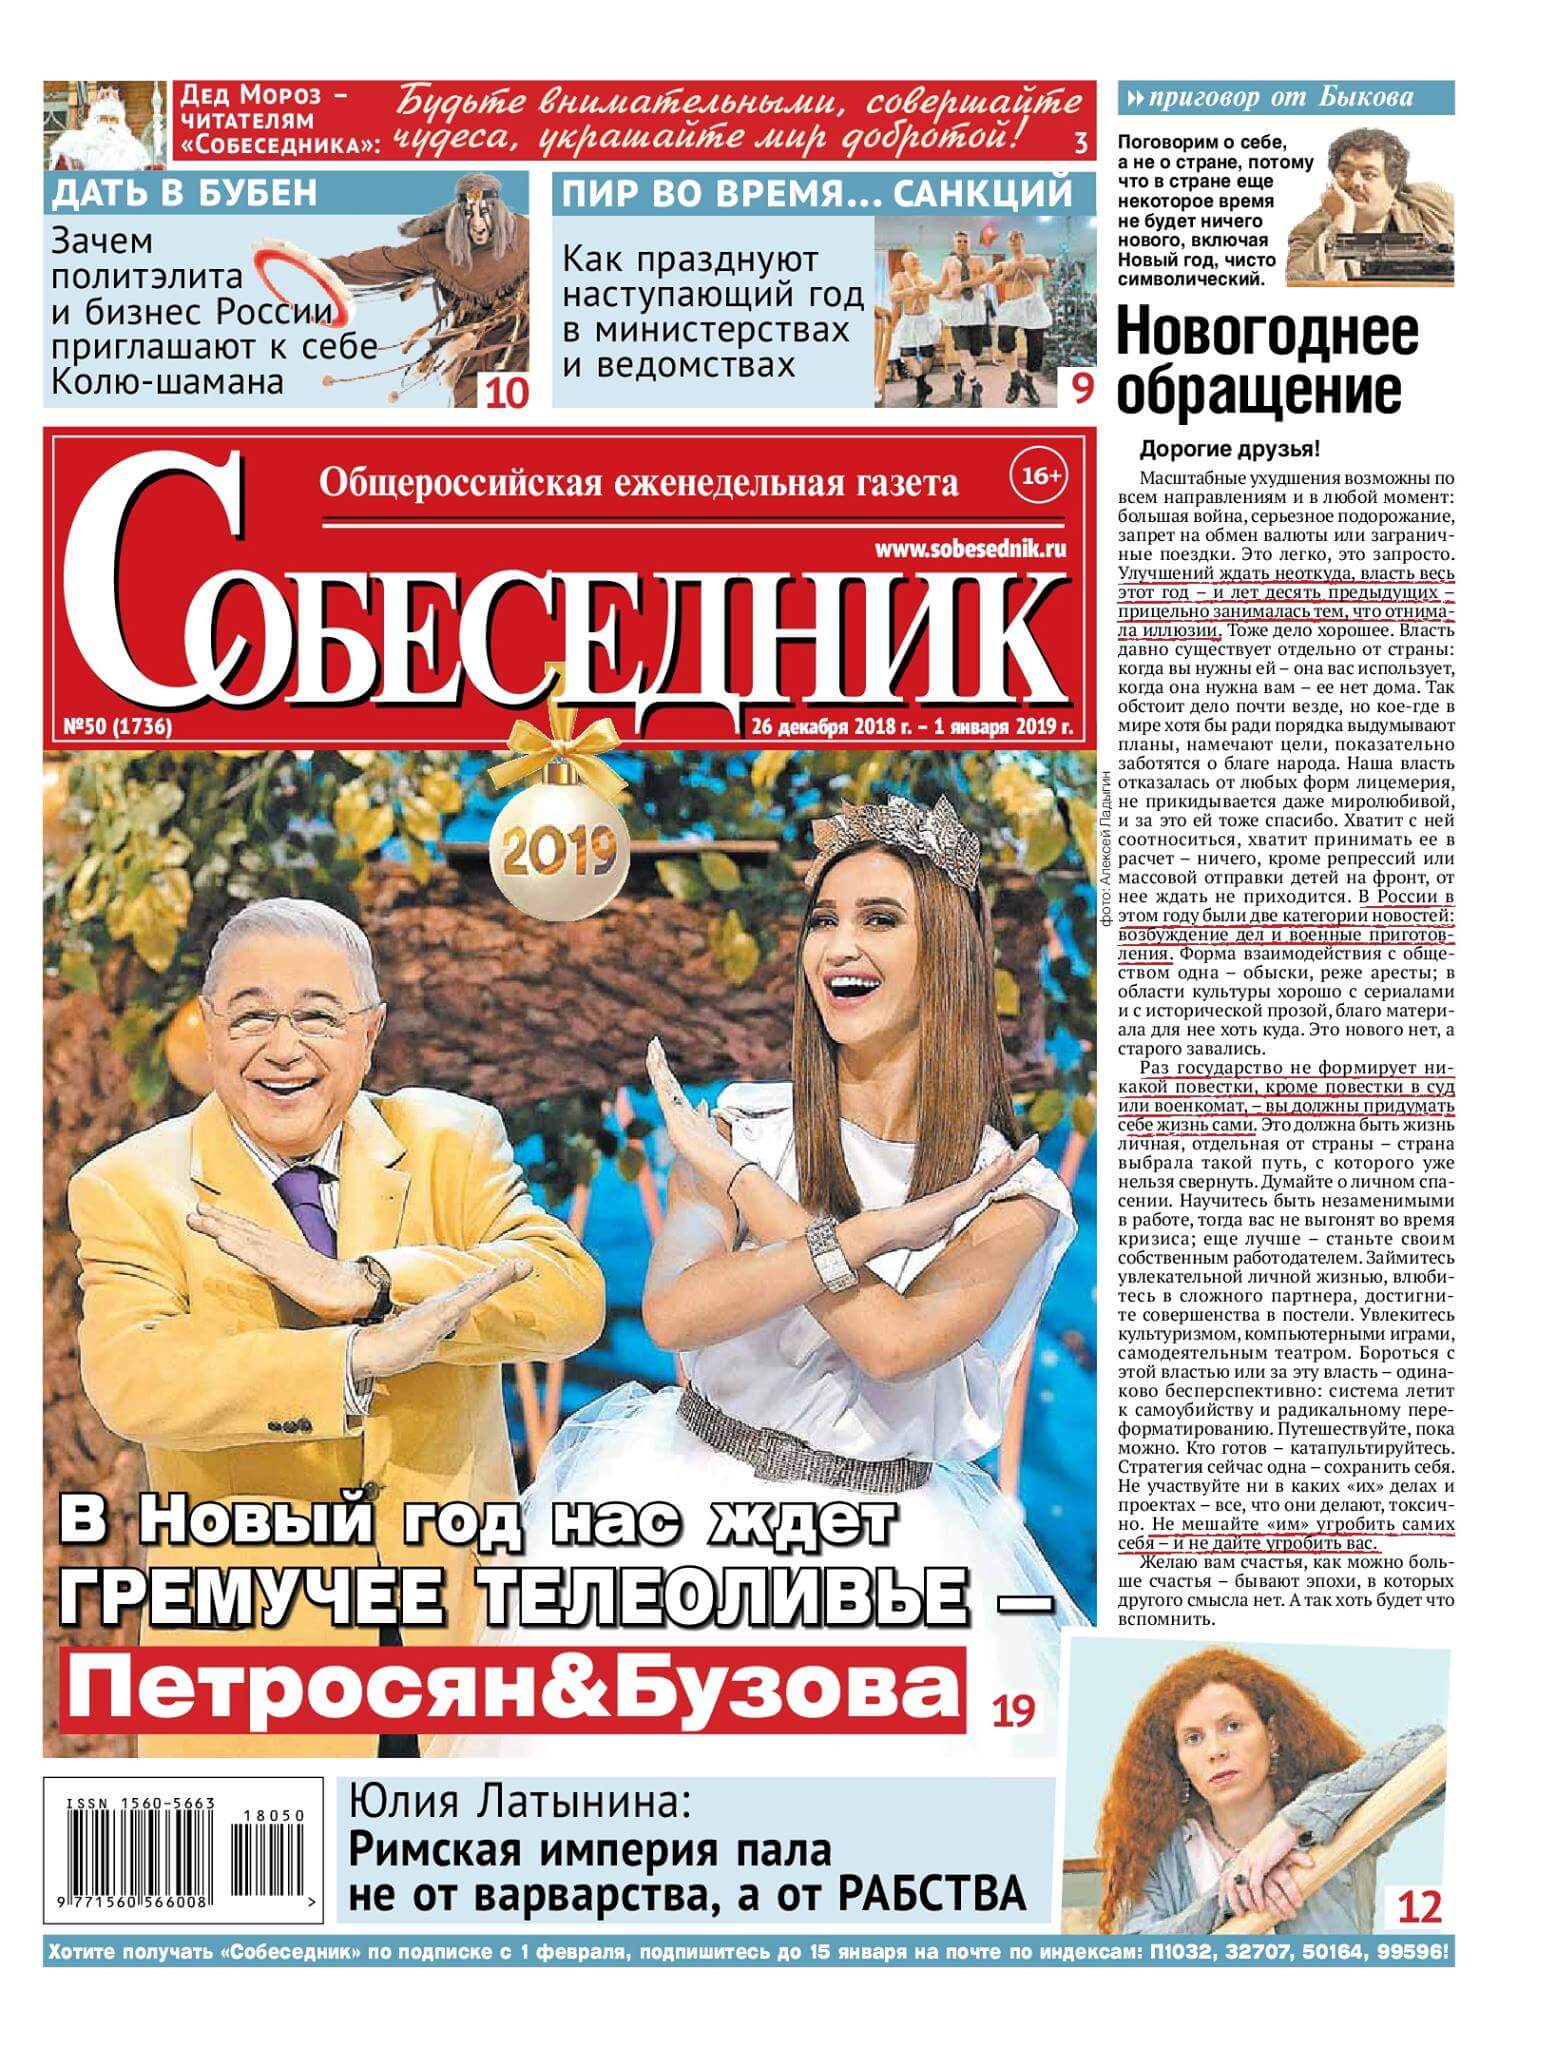 Russia newspapers 42 Sobesednik